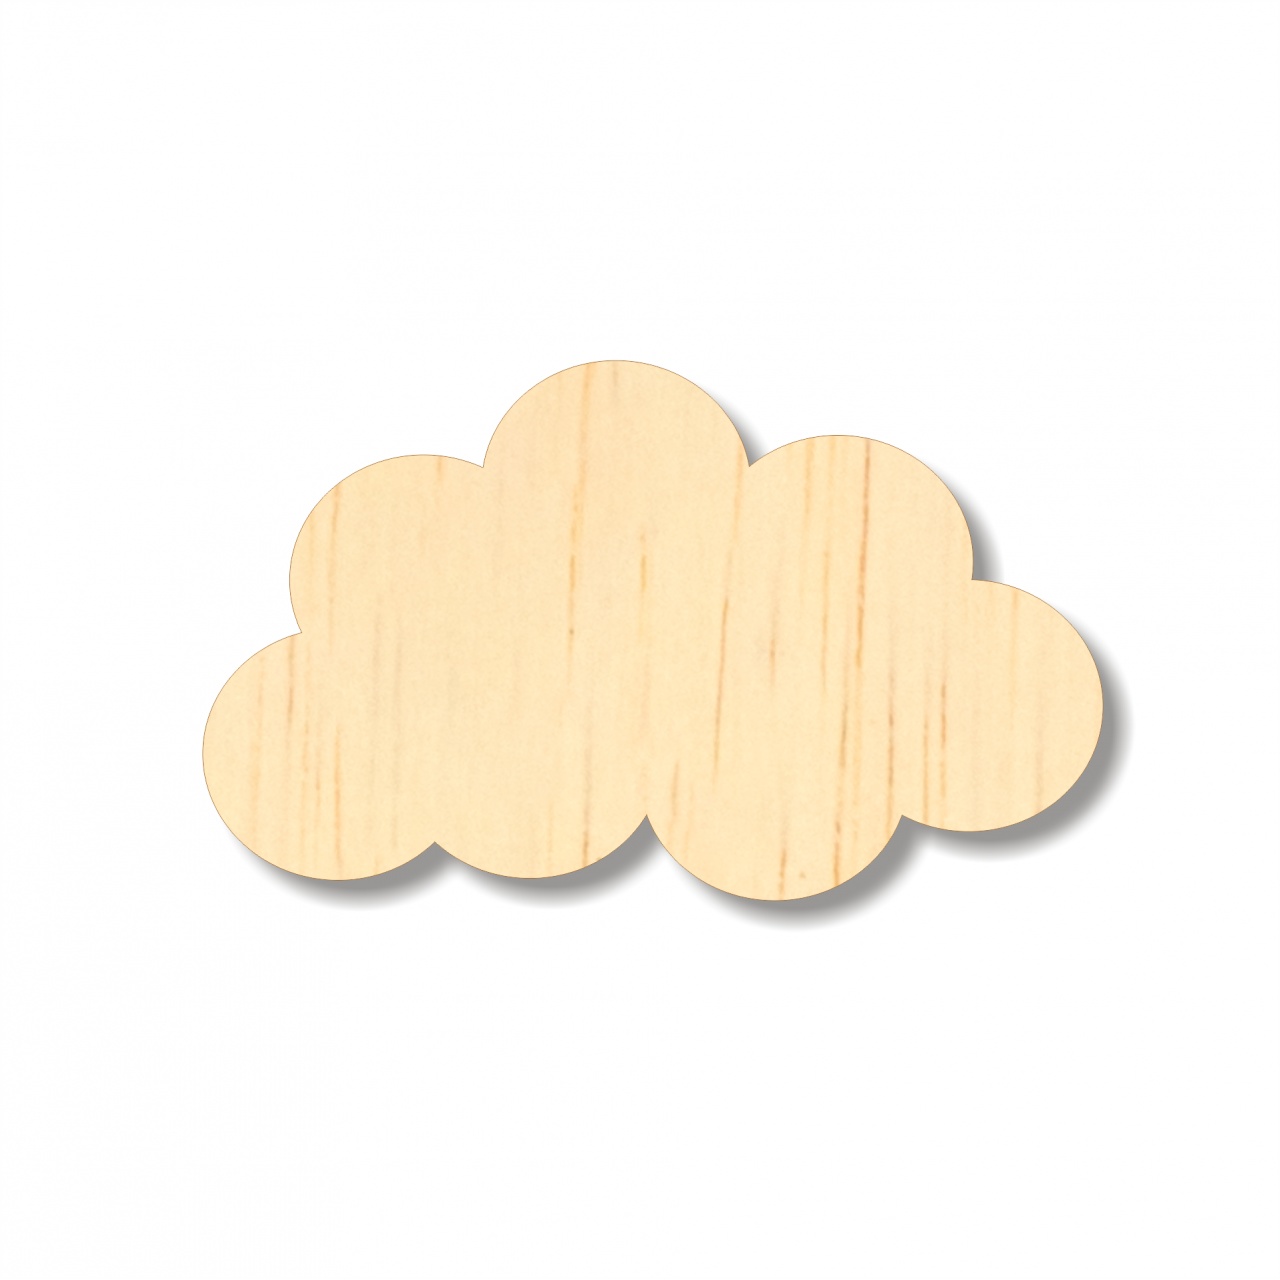 Norișor, 3×2 cm, placaj lemn natur :: 3 cm